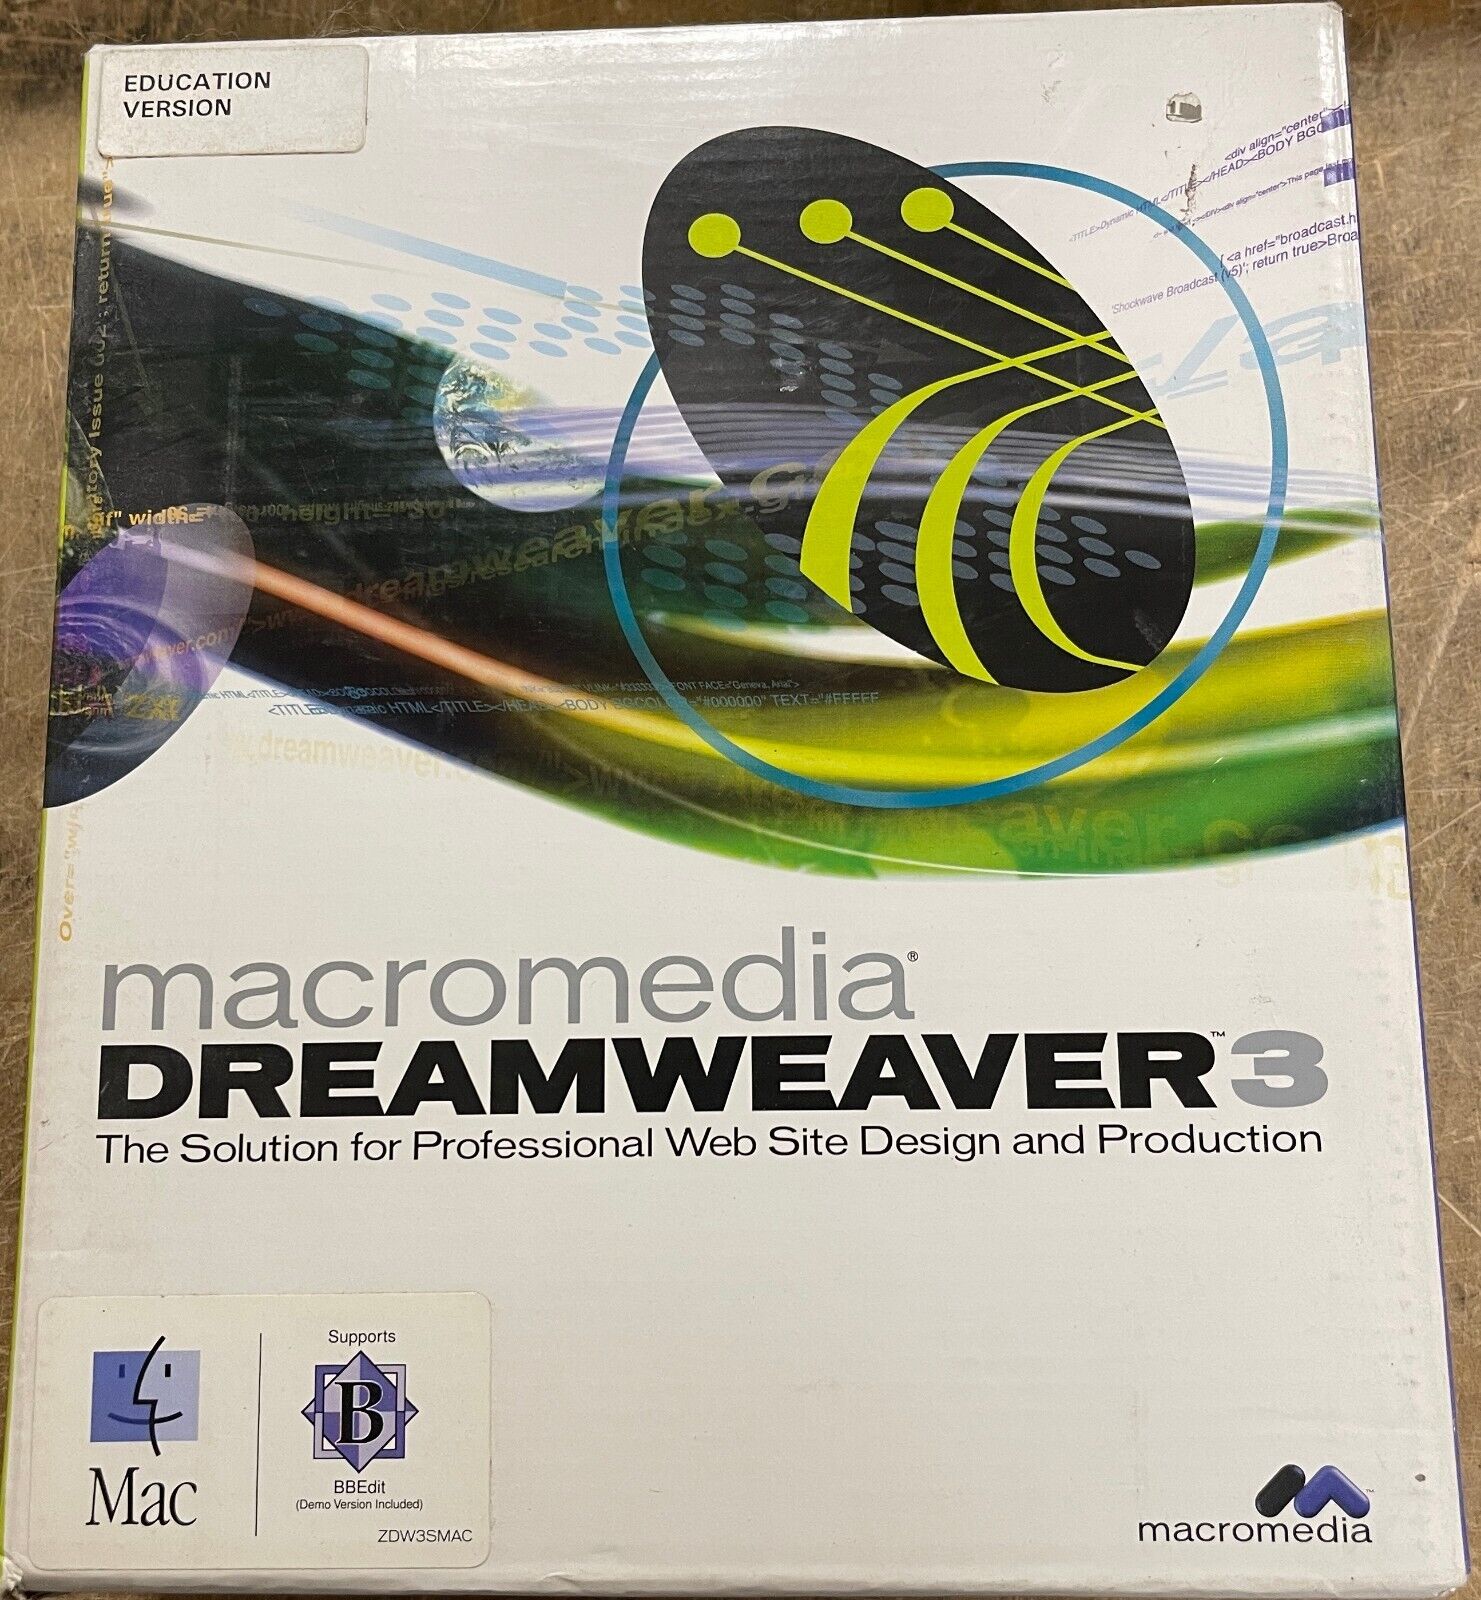 Vintage macromedia DREAMWEAVER3 Mac EDUCATION VERSION